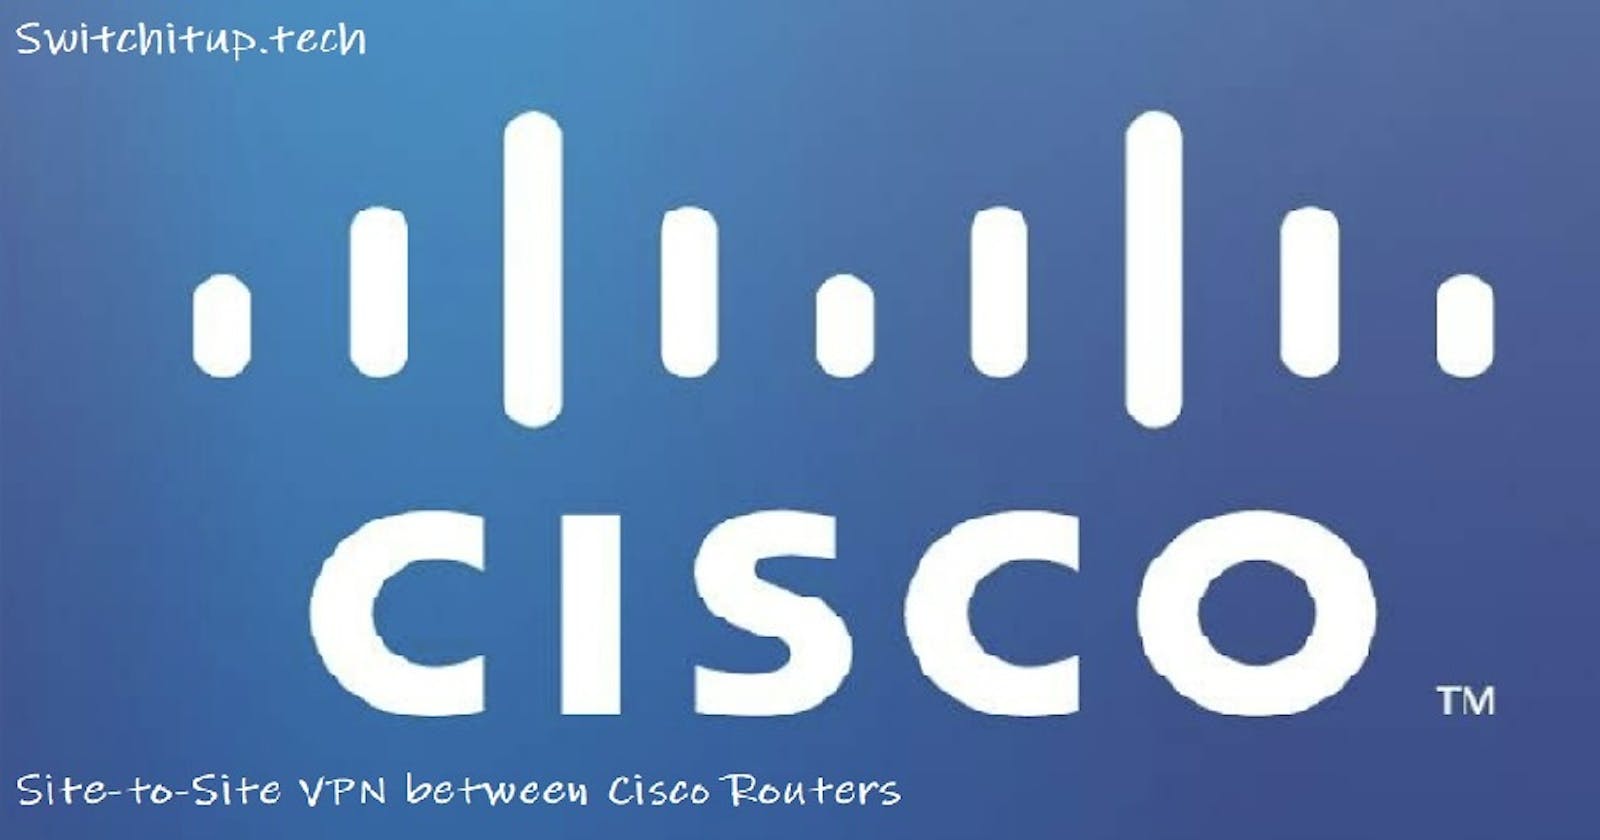 Cisco Site-to-Site VPN